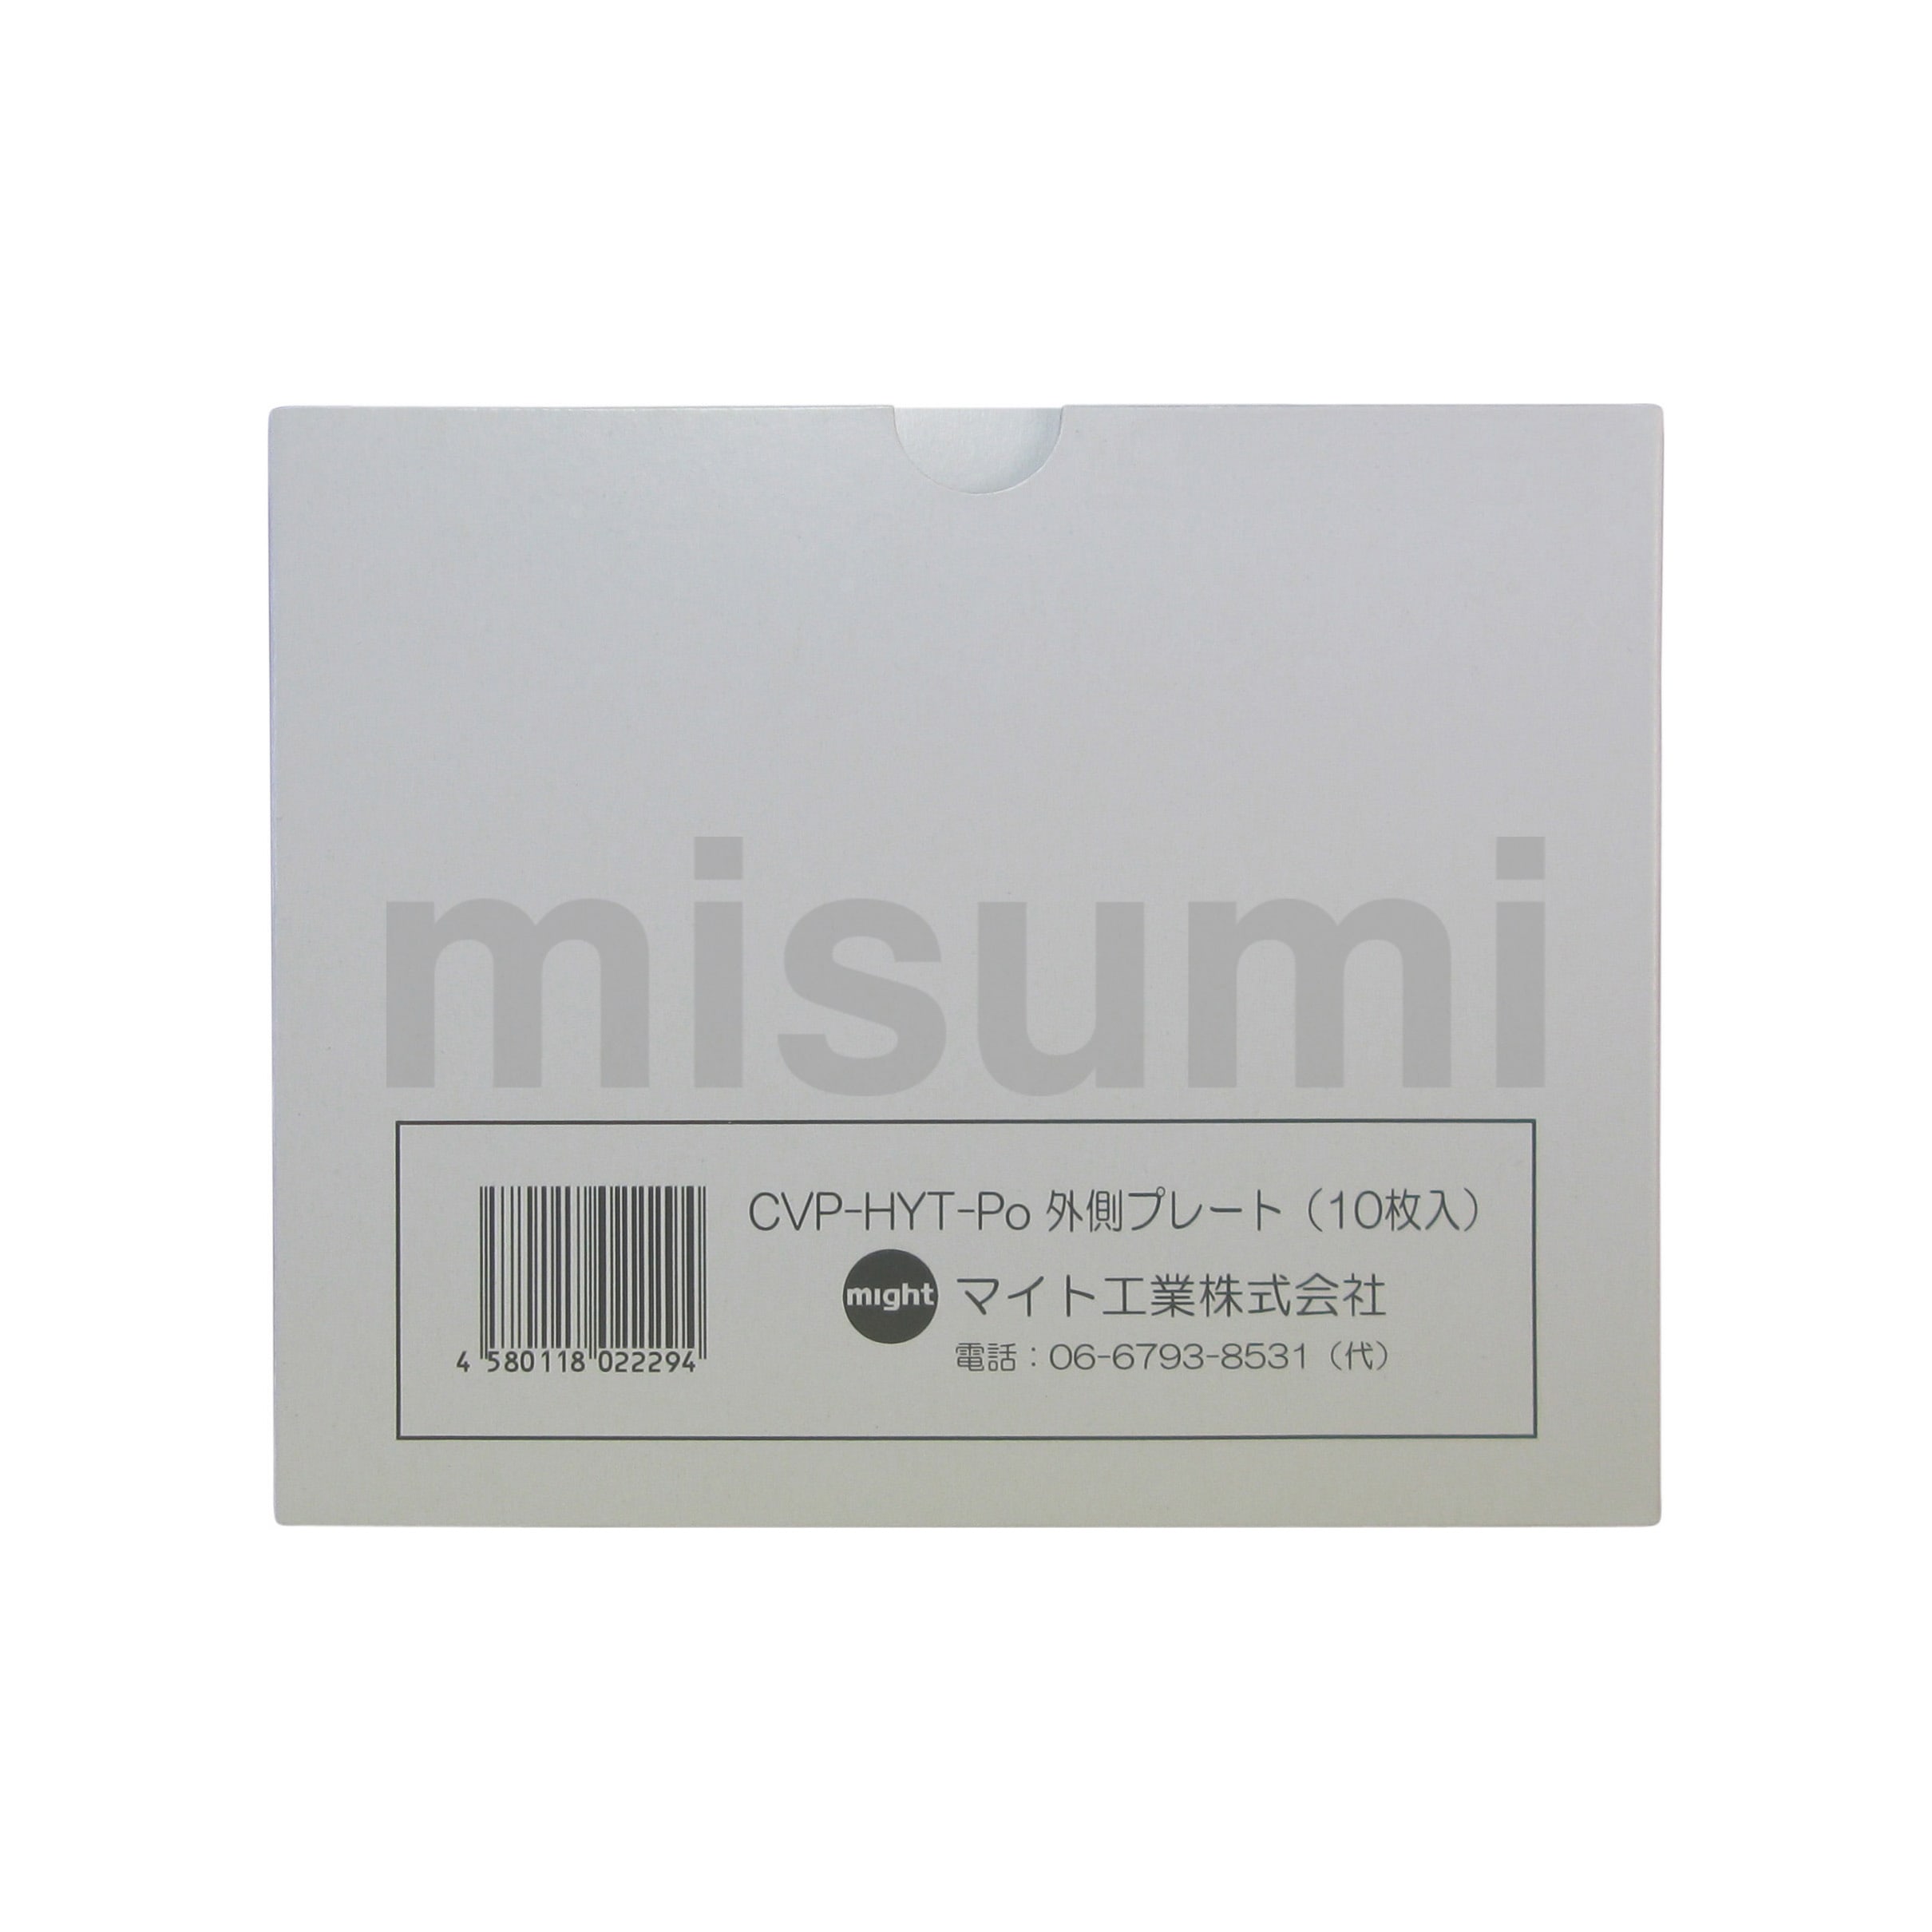 CVP-900PO 溶接面 レインボーマスクシリーズ用カバープレート マイト工業 MISUMI(ミスミ)